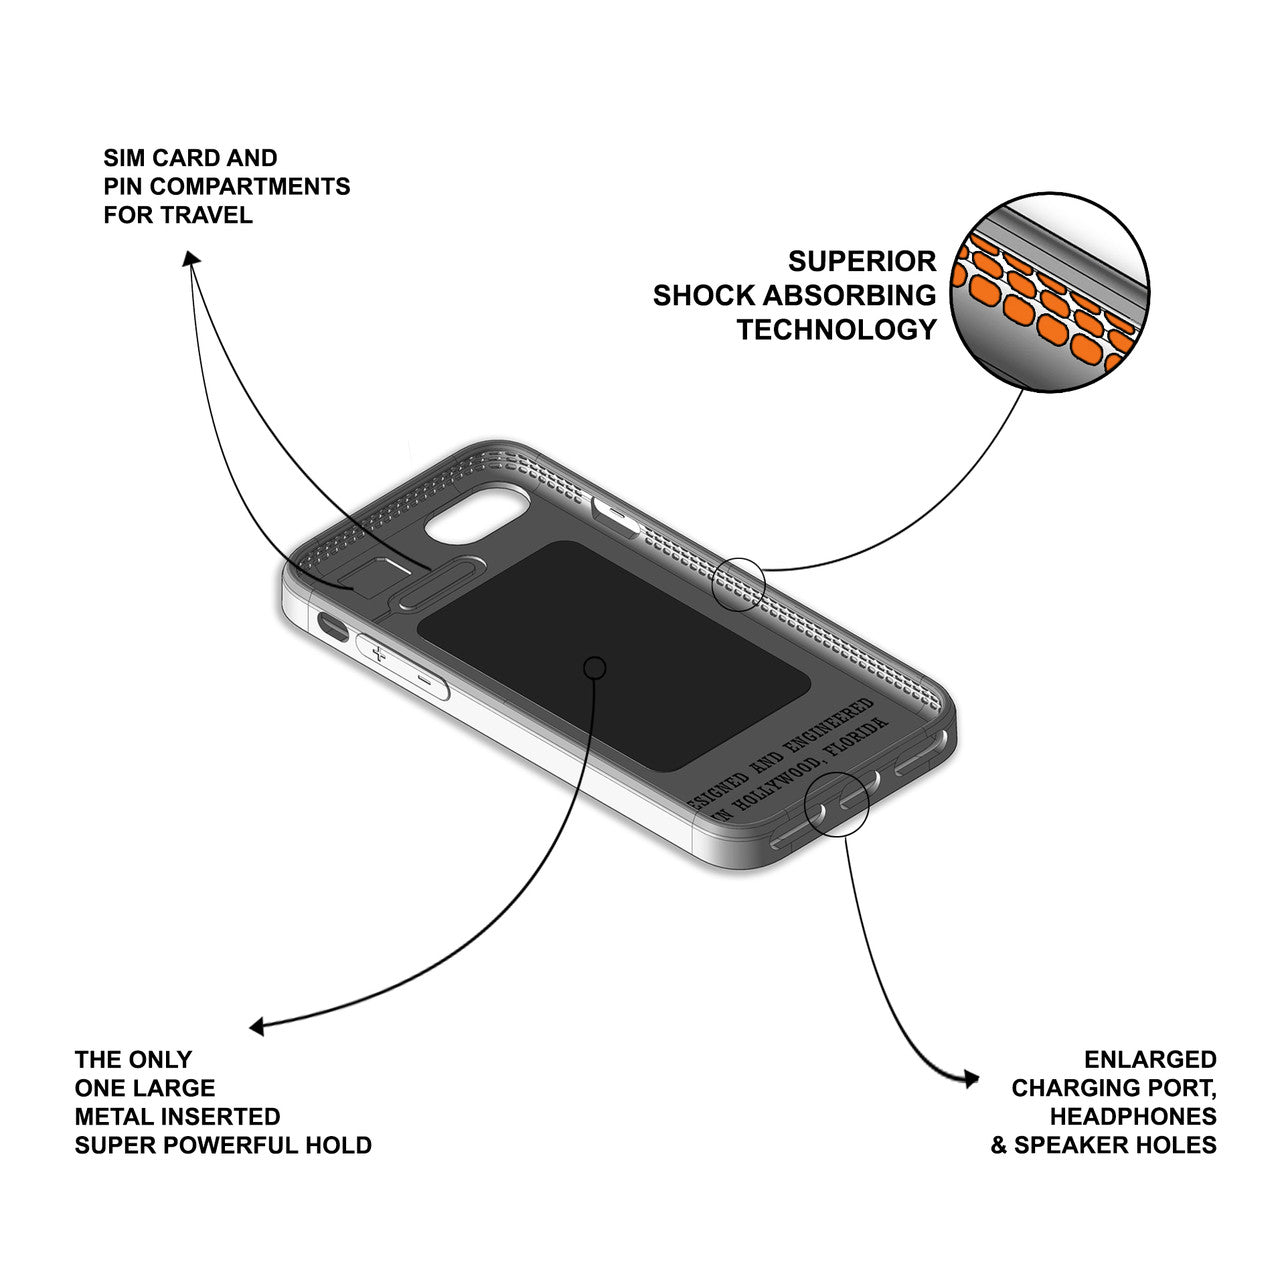 Eat Sleep Play - Engraved Phone Case